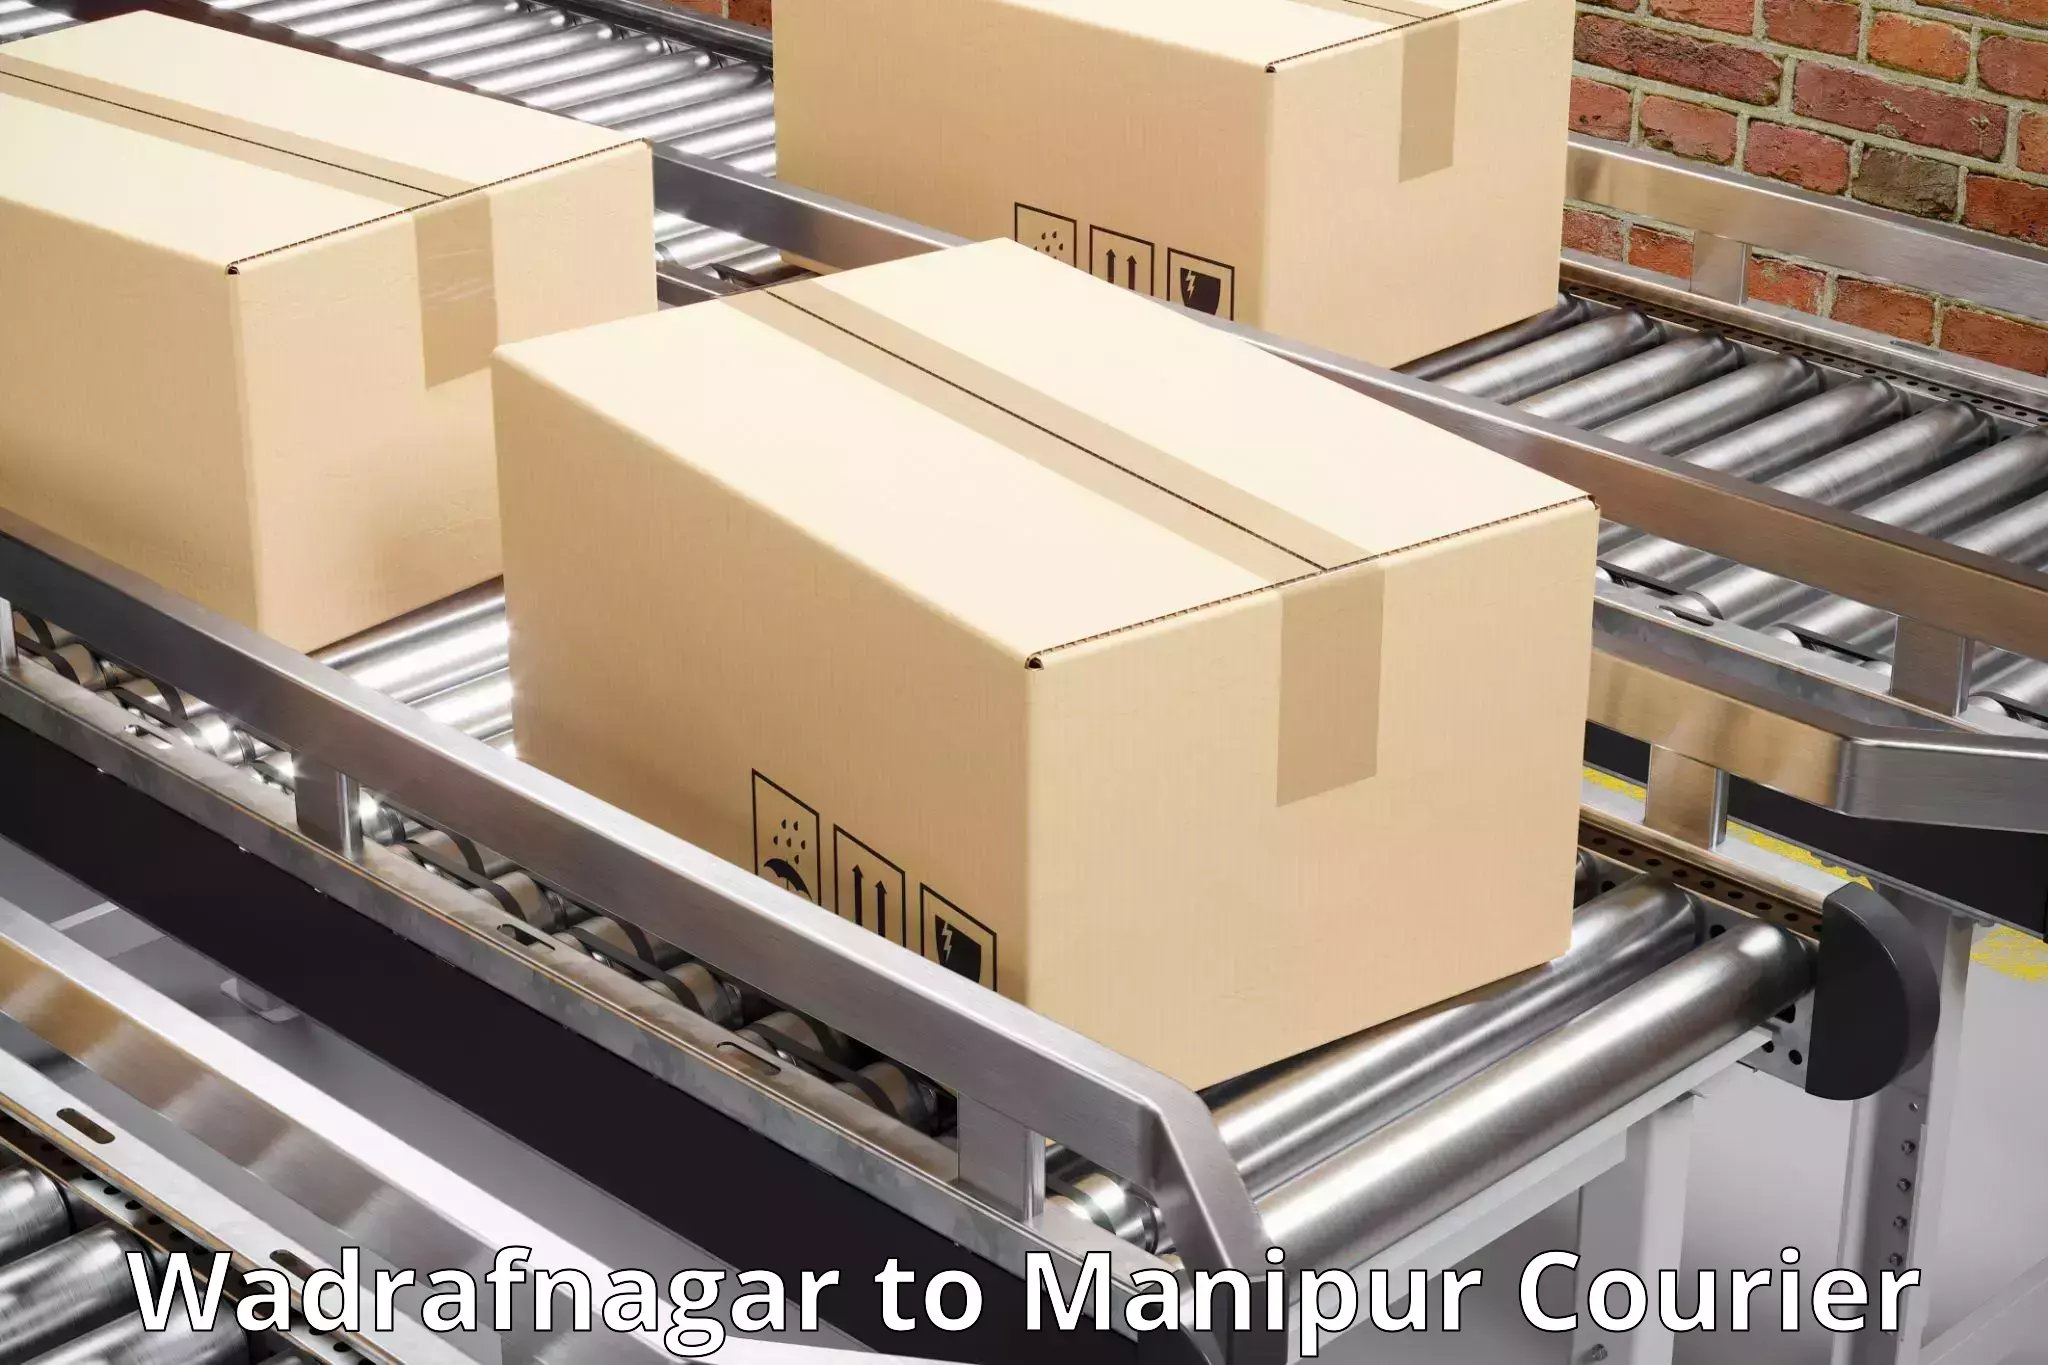 Seamless shipping experience Wadrafnagar to Thoubal